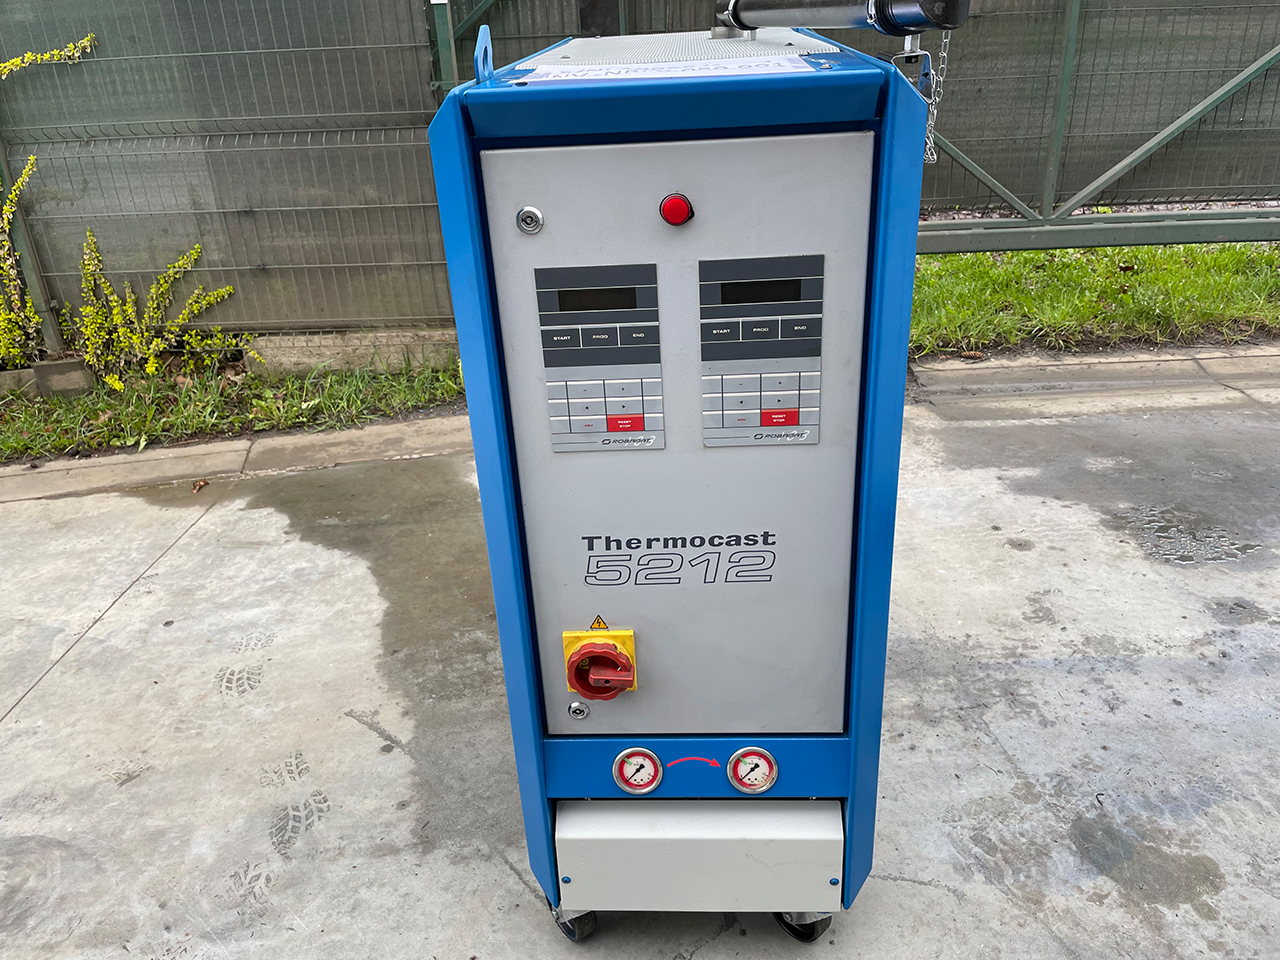 Robamat Thermocast 5212 oil temperature control unit ZU2218, used